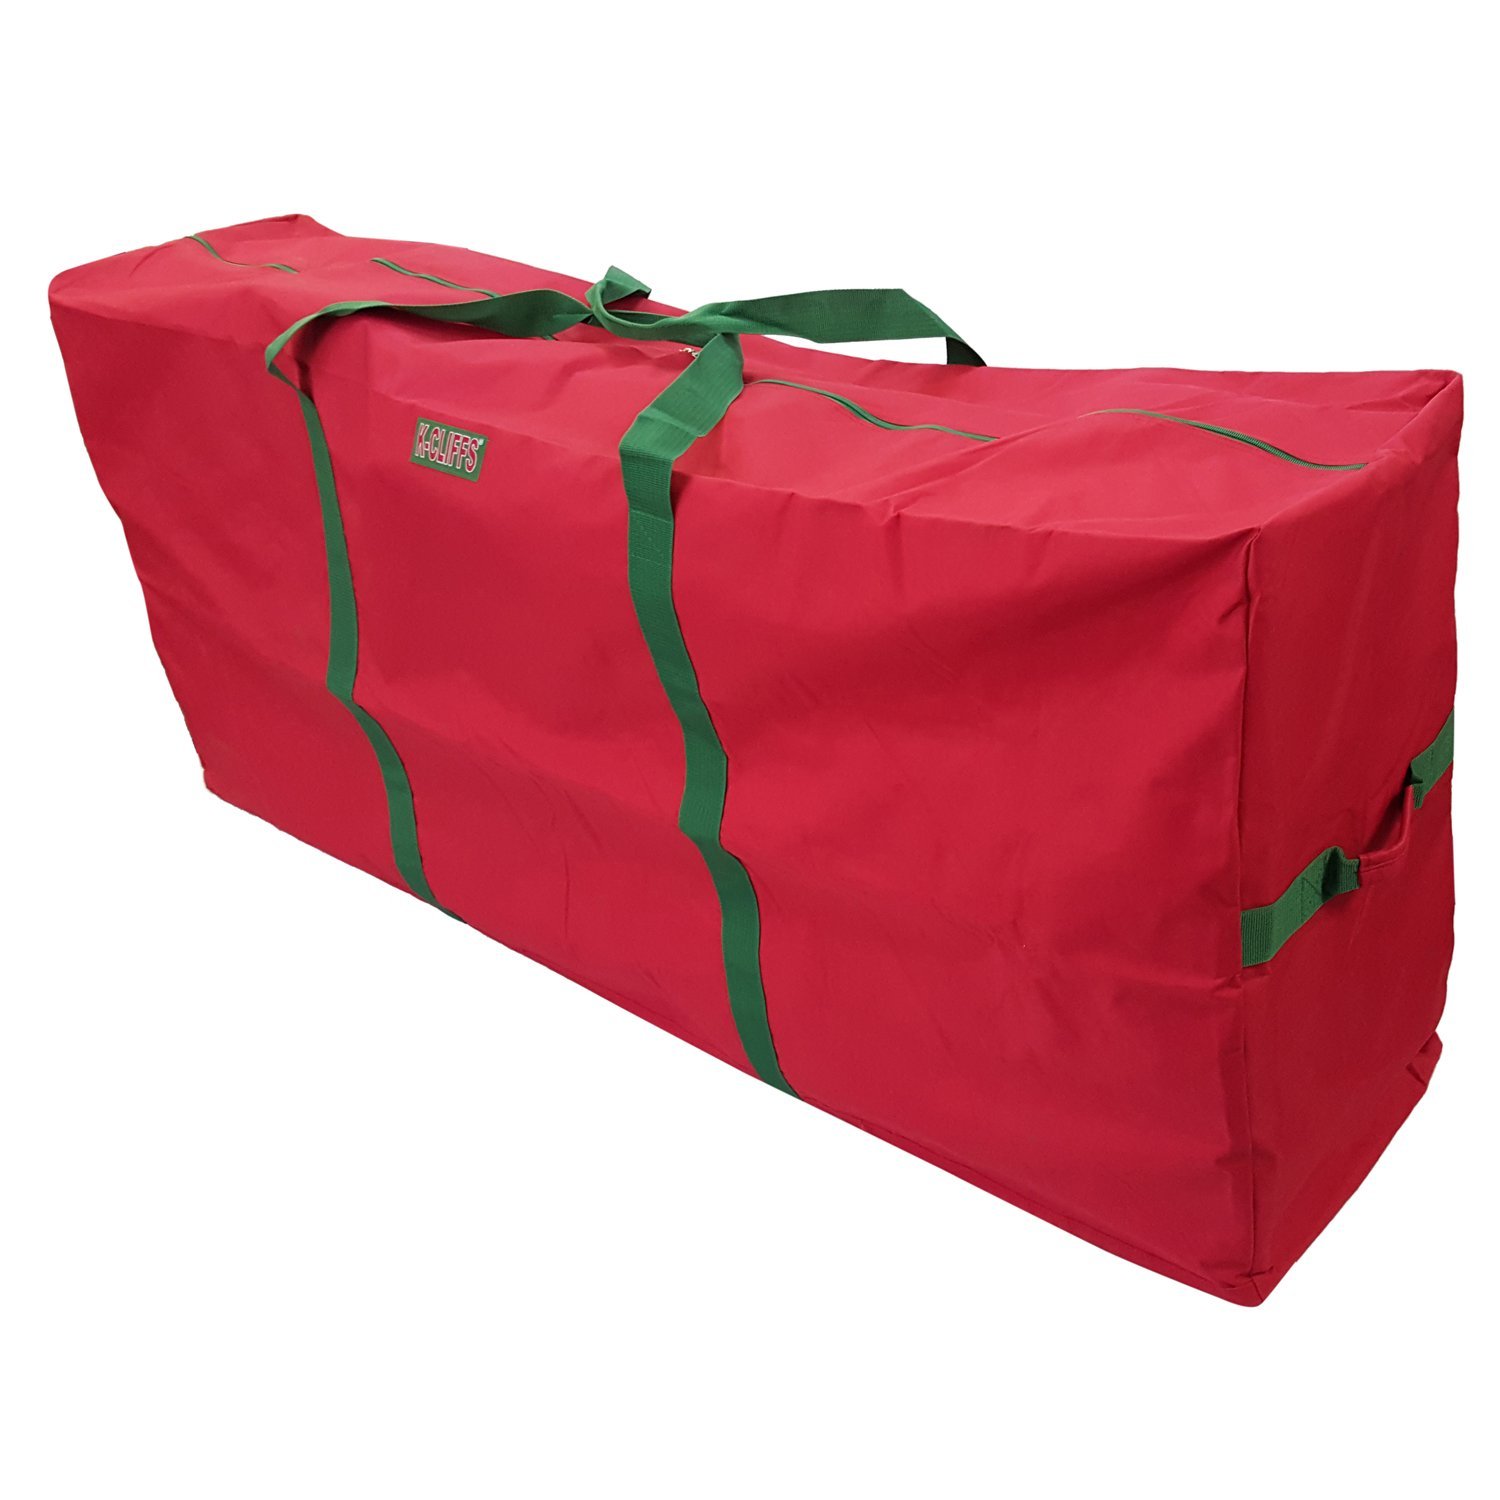 A Christmas tree storage bag.